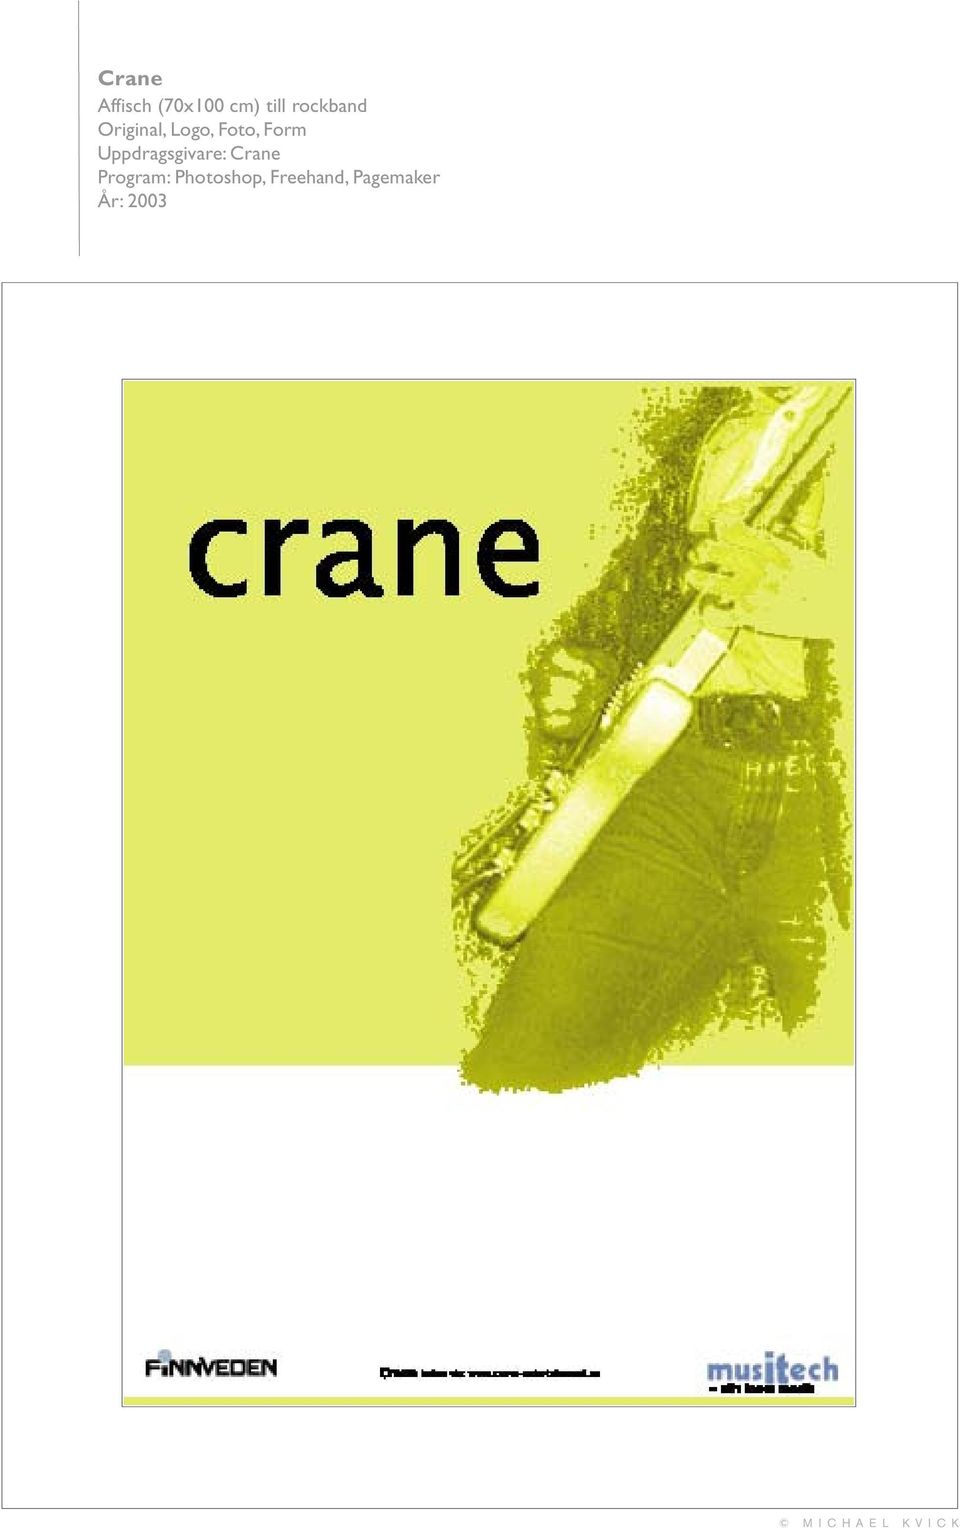 Form Uppdragsgivare: Crane